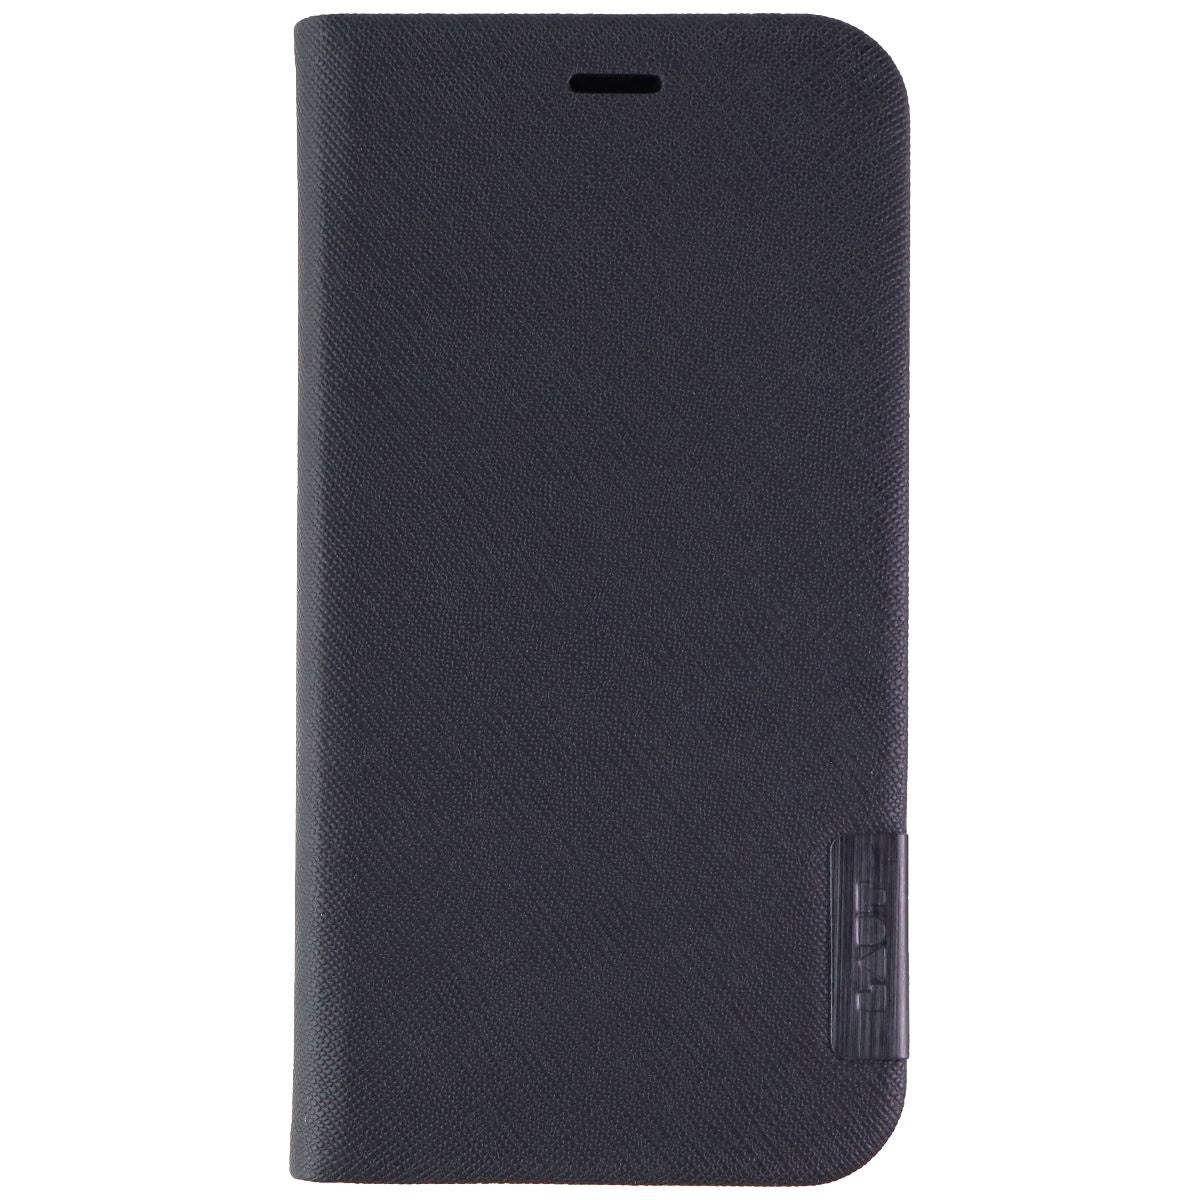 LAUT Prestige Folio Case for Apple iPhone 11 Pro - Black Saffiano Vegan Leather Cell Phone - Cases, Covers & Skins Laut    - Simple Cell Bulk Wholesale Pricing - USA Seller